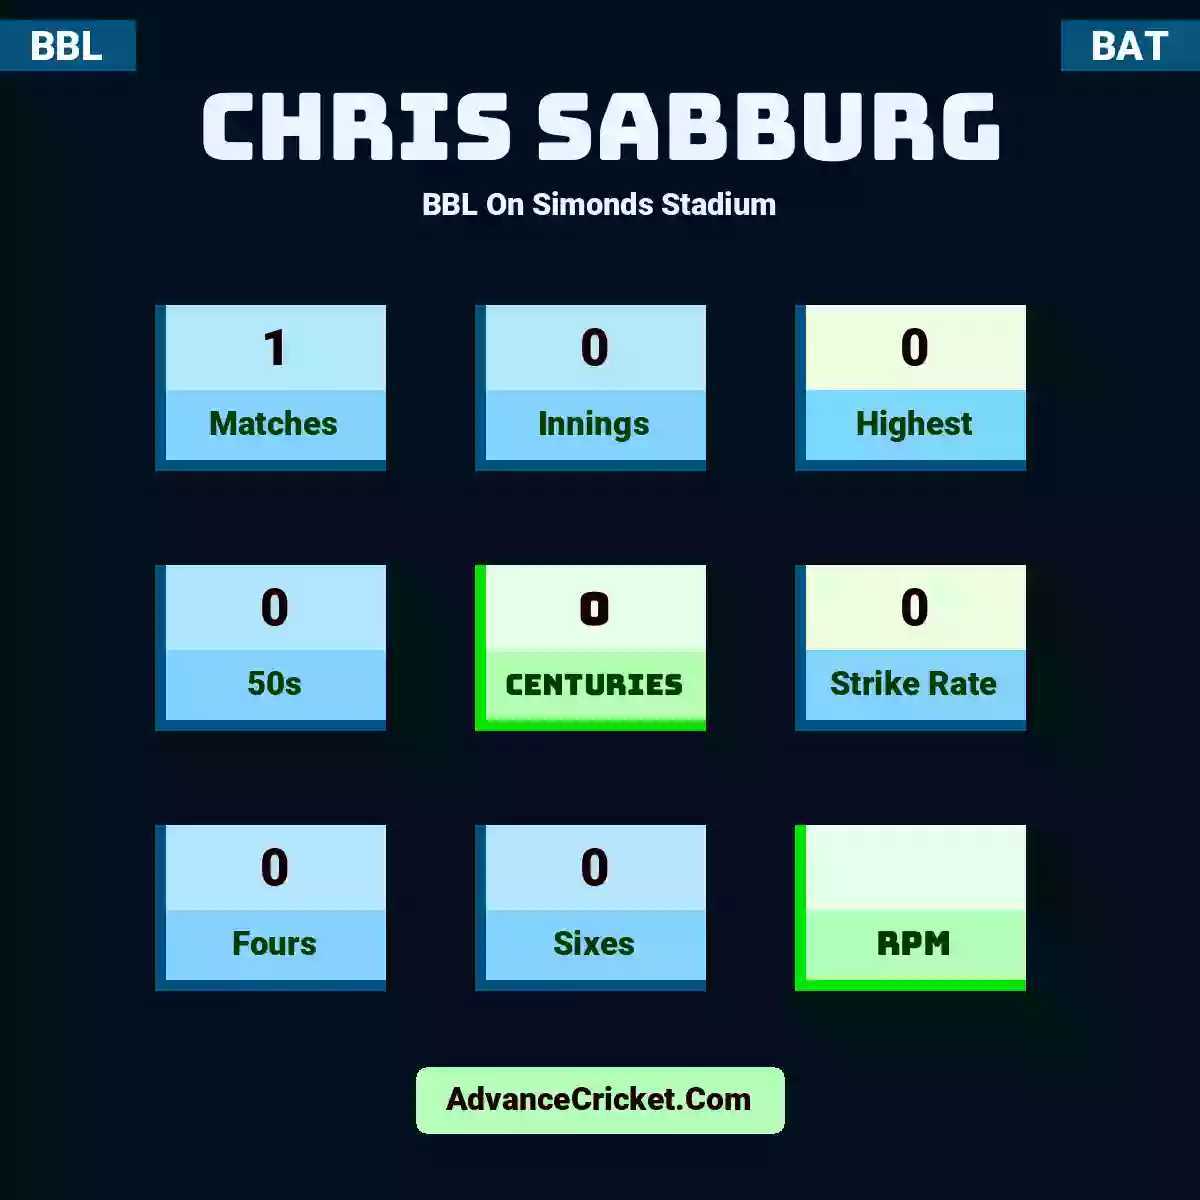 Chris Sabburg BBL  On Simonds Stadium, Chris Sabburg played 1 matches, scored 0 runs as highest, 0 half-centuries, and 0 centuries, with a strike rate of 0. C.Sabburg hit 0 fours and 0 sixes.